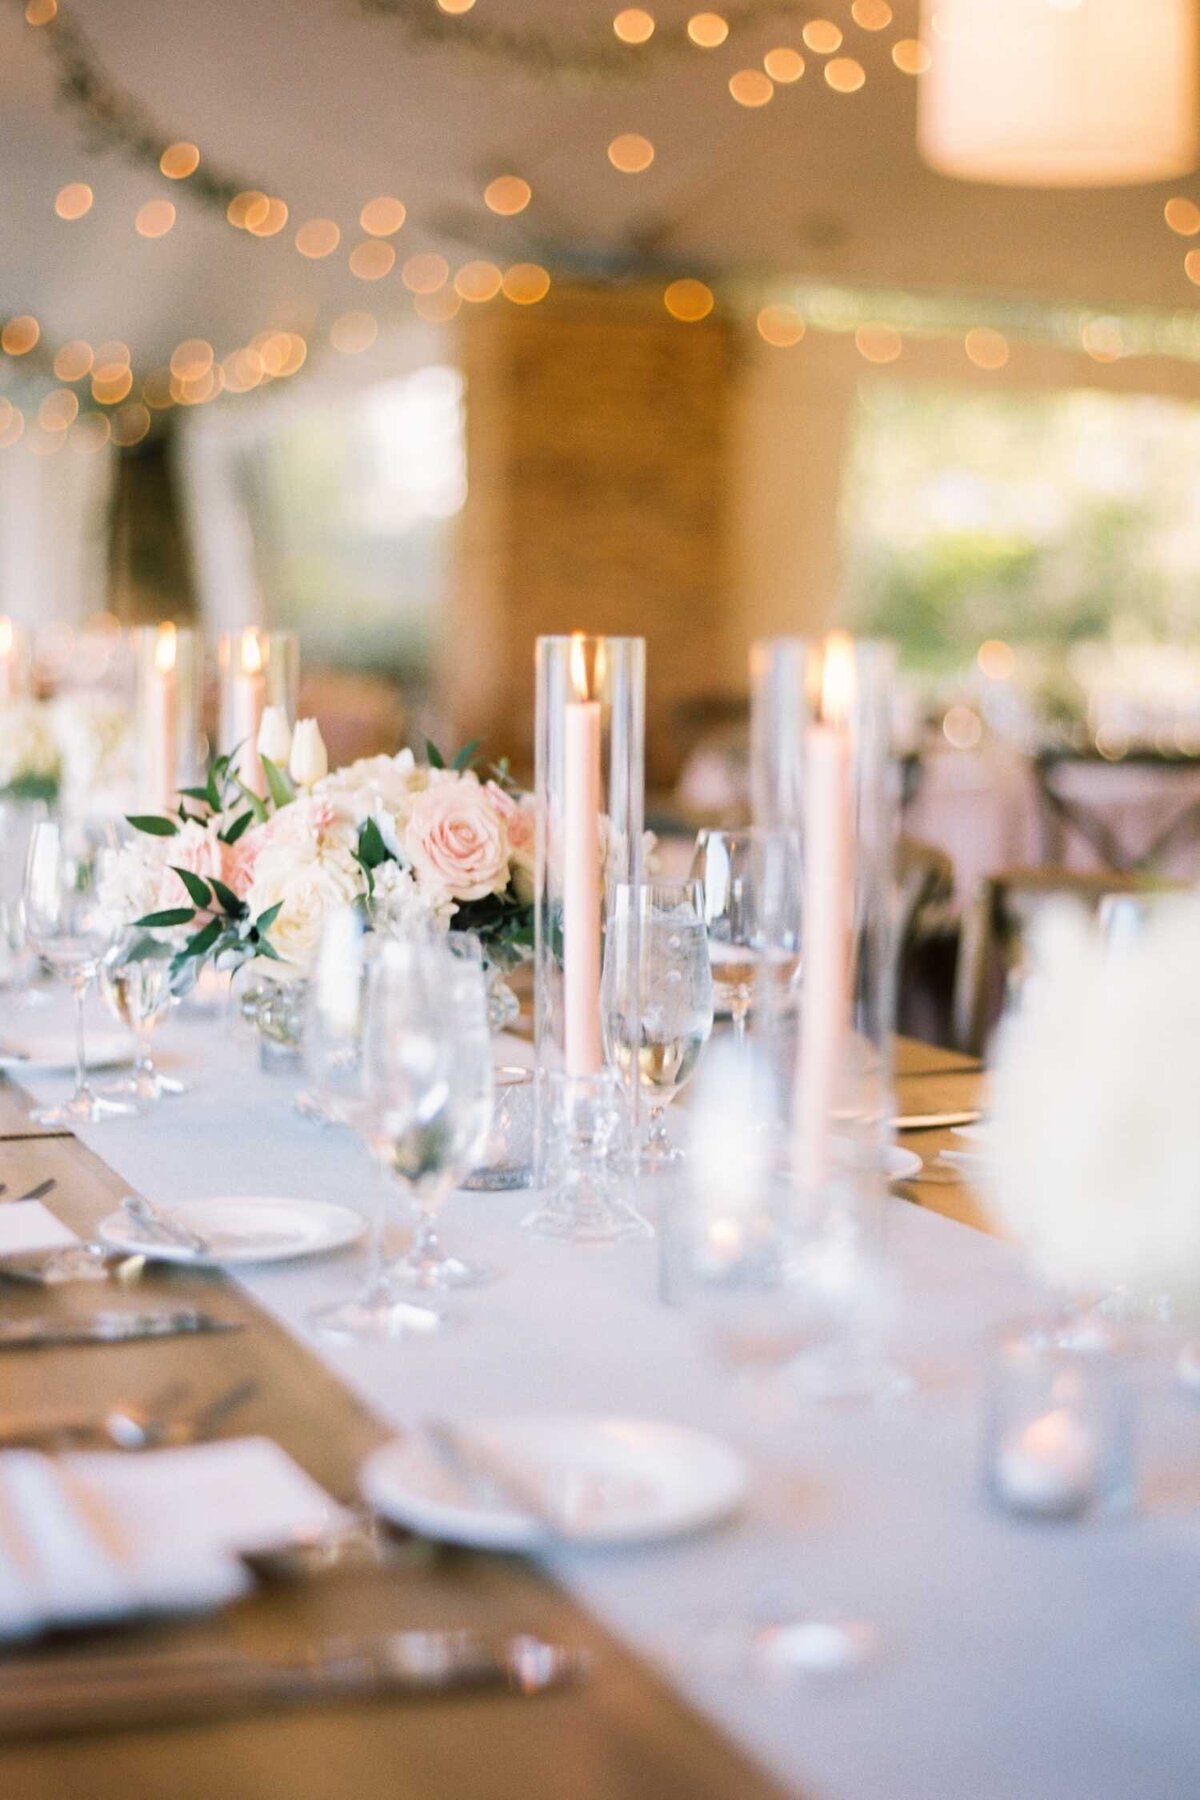 Farm Table Wedding Reception Design with Taper Candles at Luxury Chicago North Shore Garden Wedding Venue